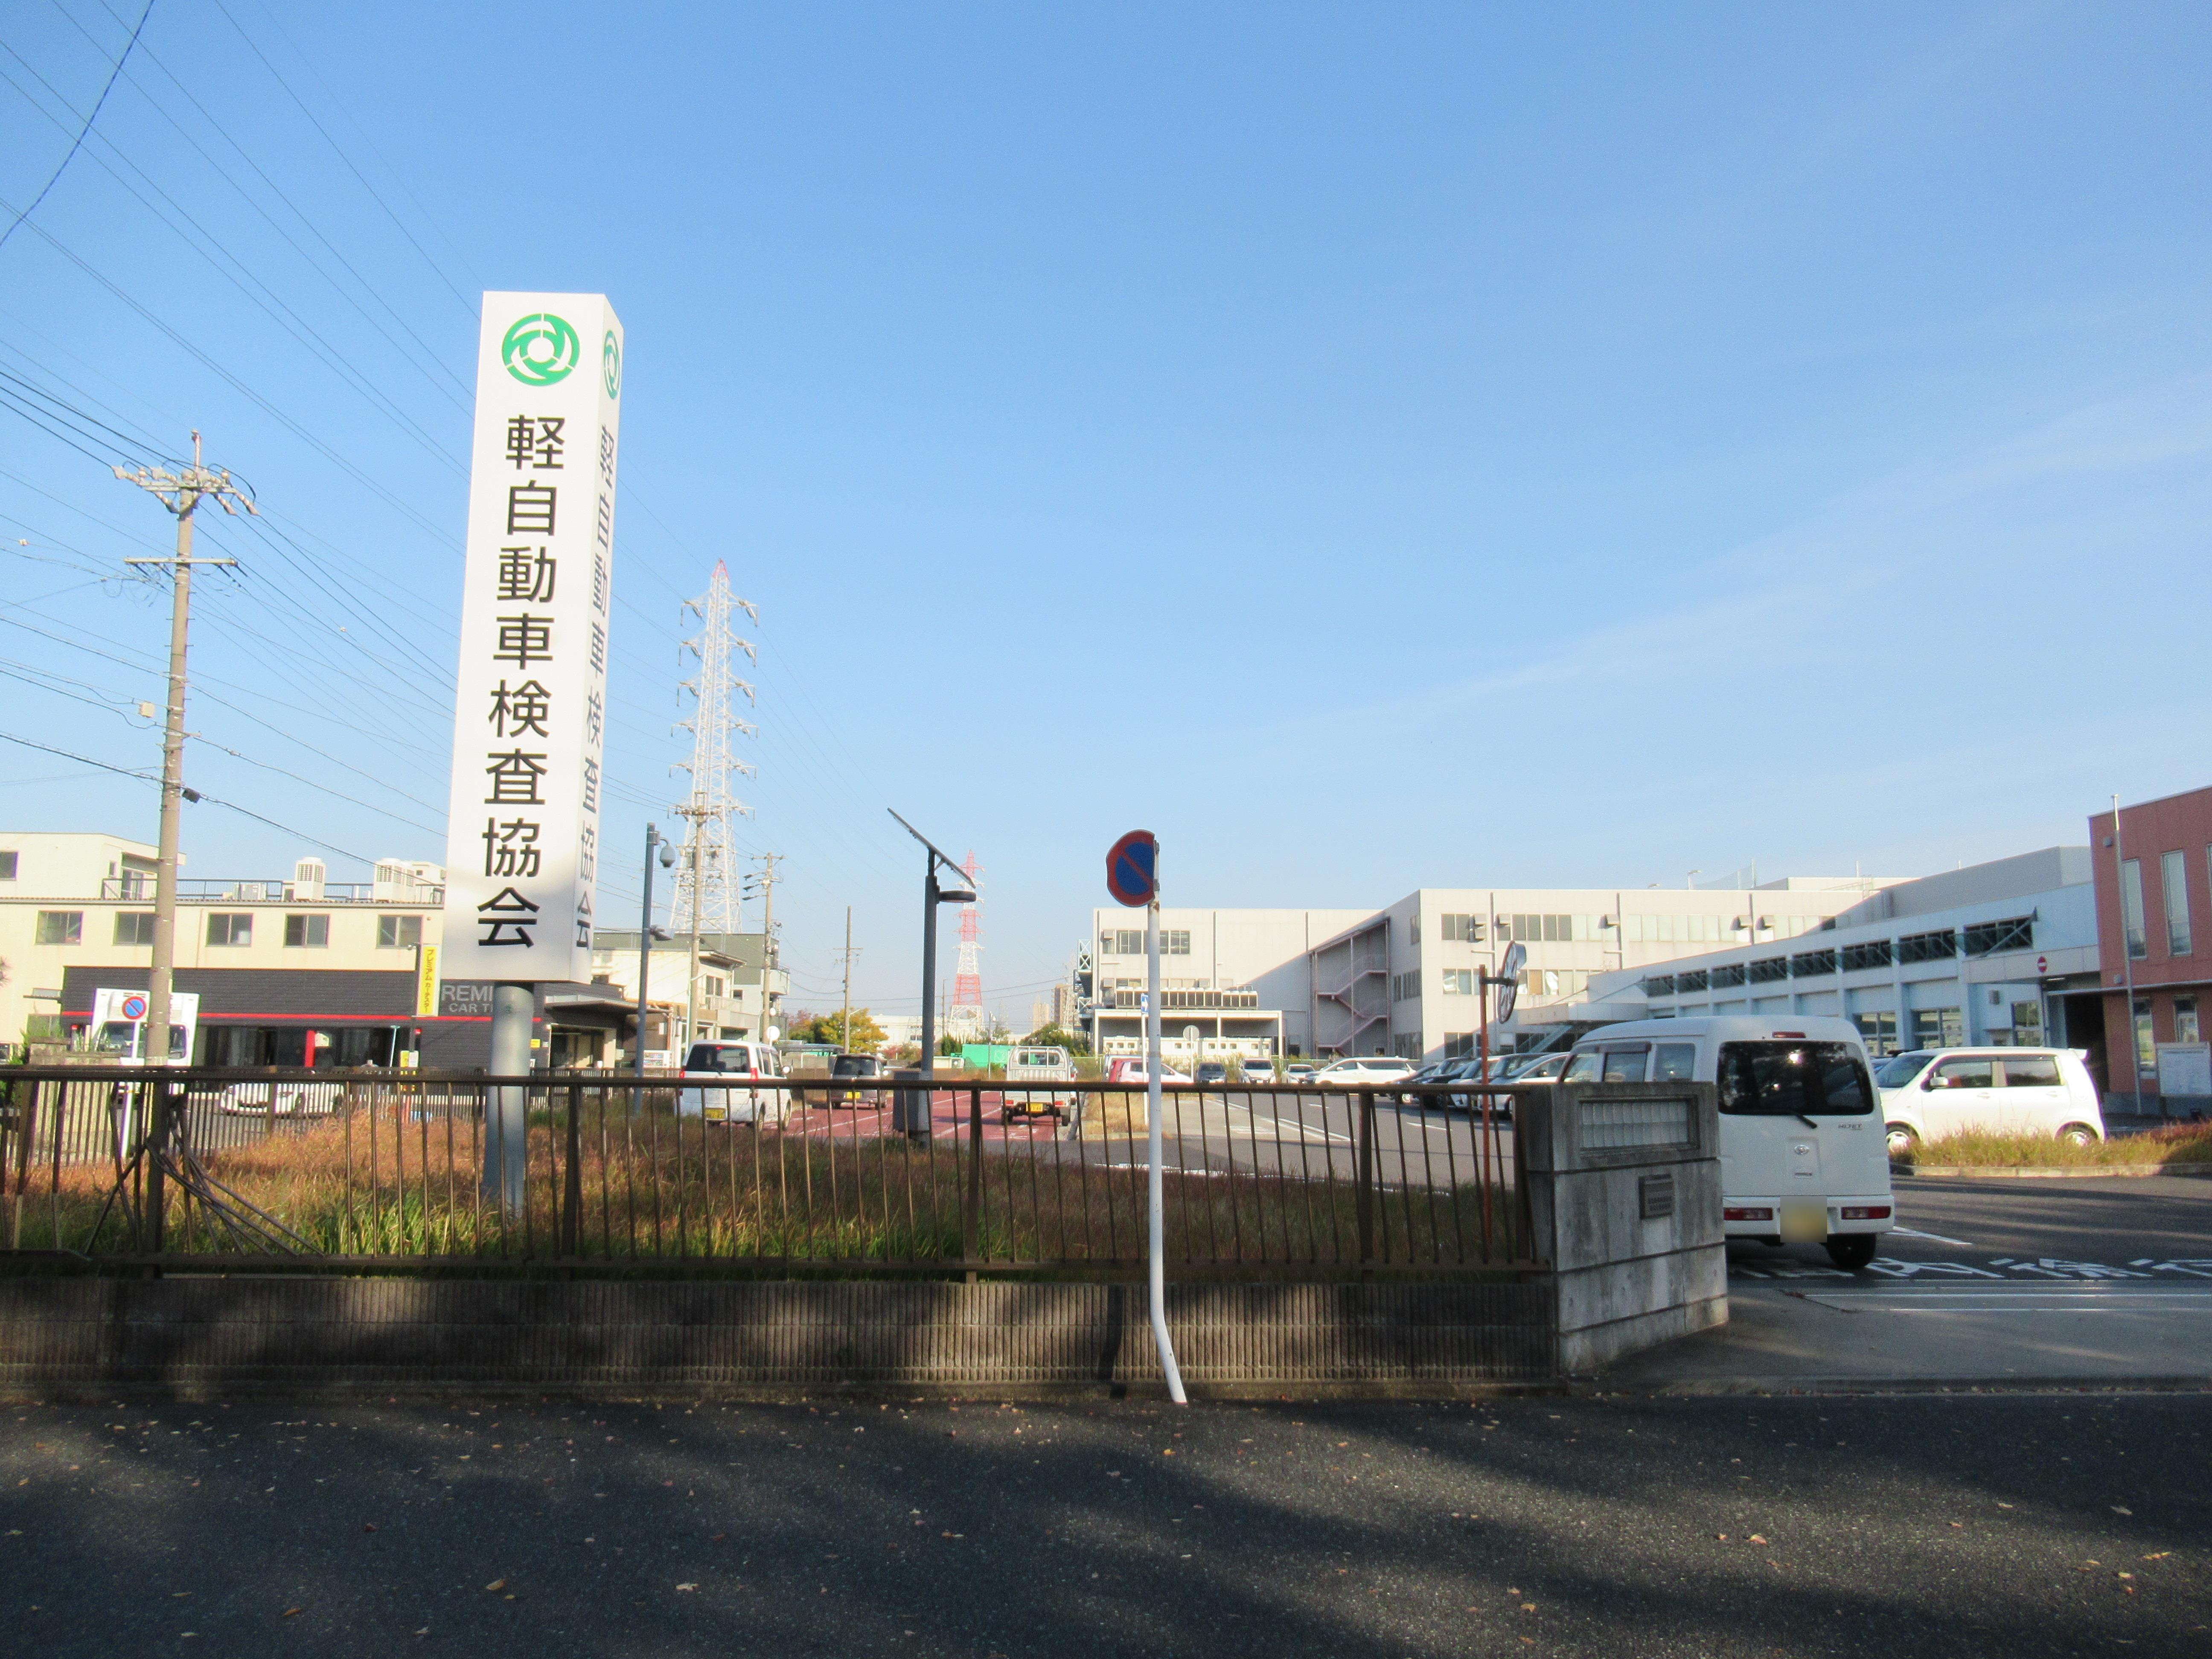 Nagoya Light Motor Vehicle Inspection Organization